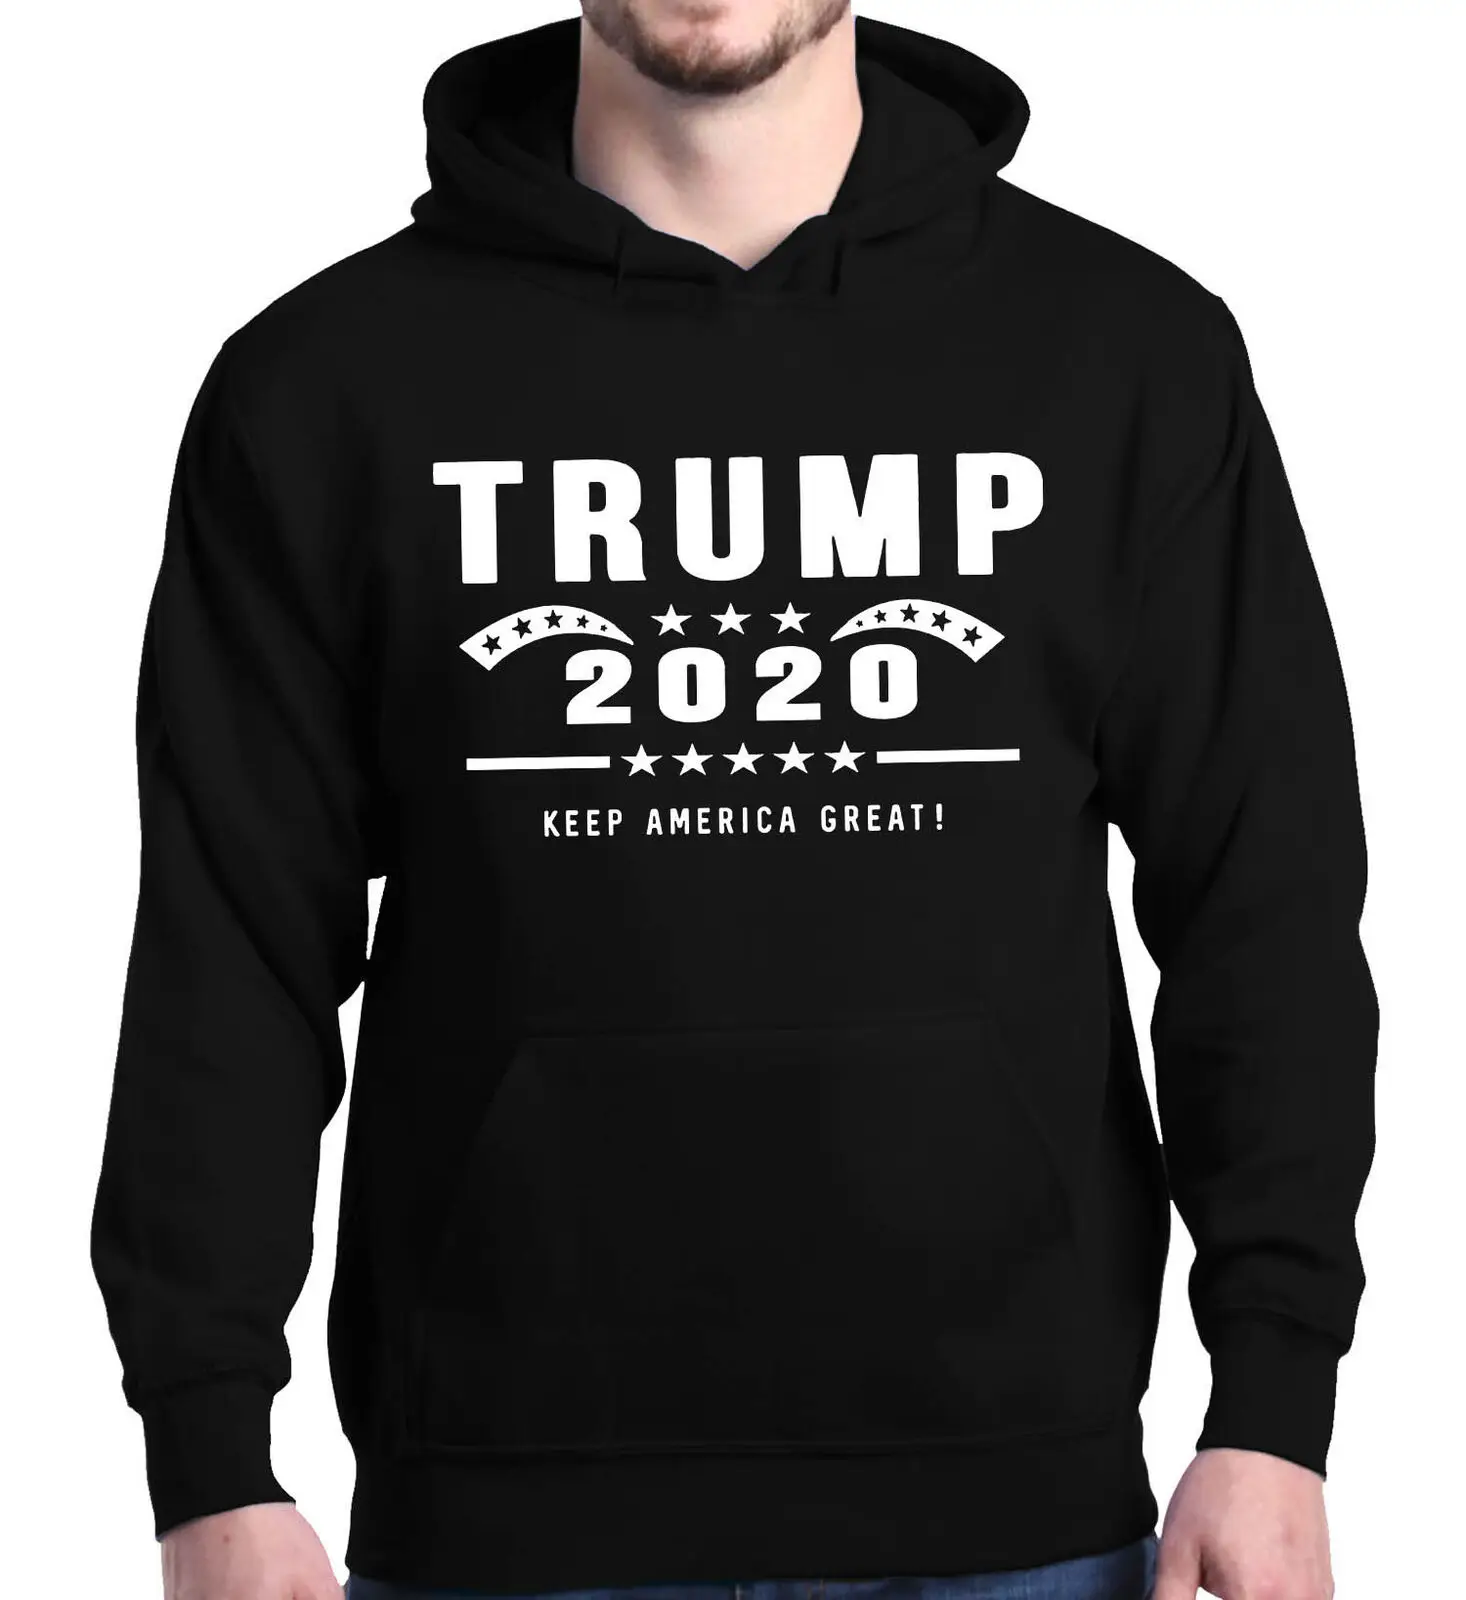 

Trump 2020 Keep America Great! Hoodies MAGA Re-Elect Trump Pence 45 Sweatshirts